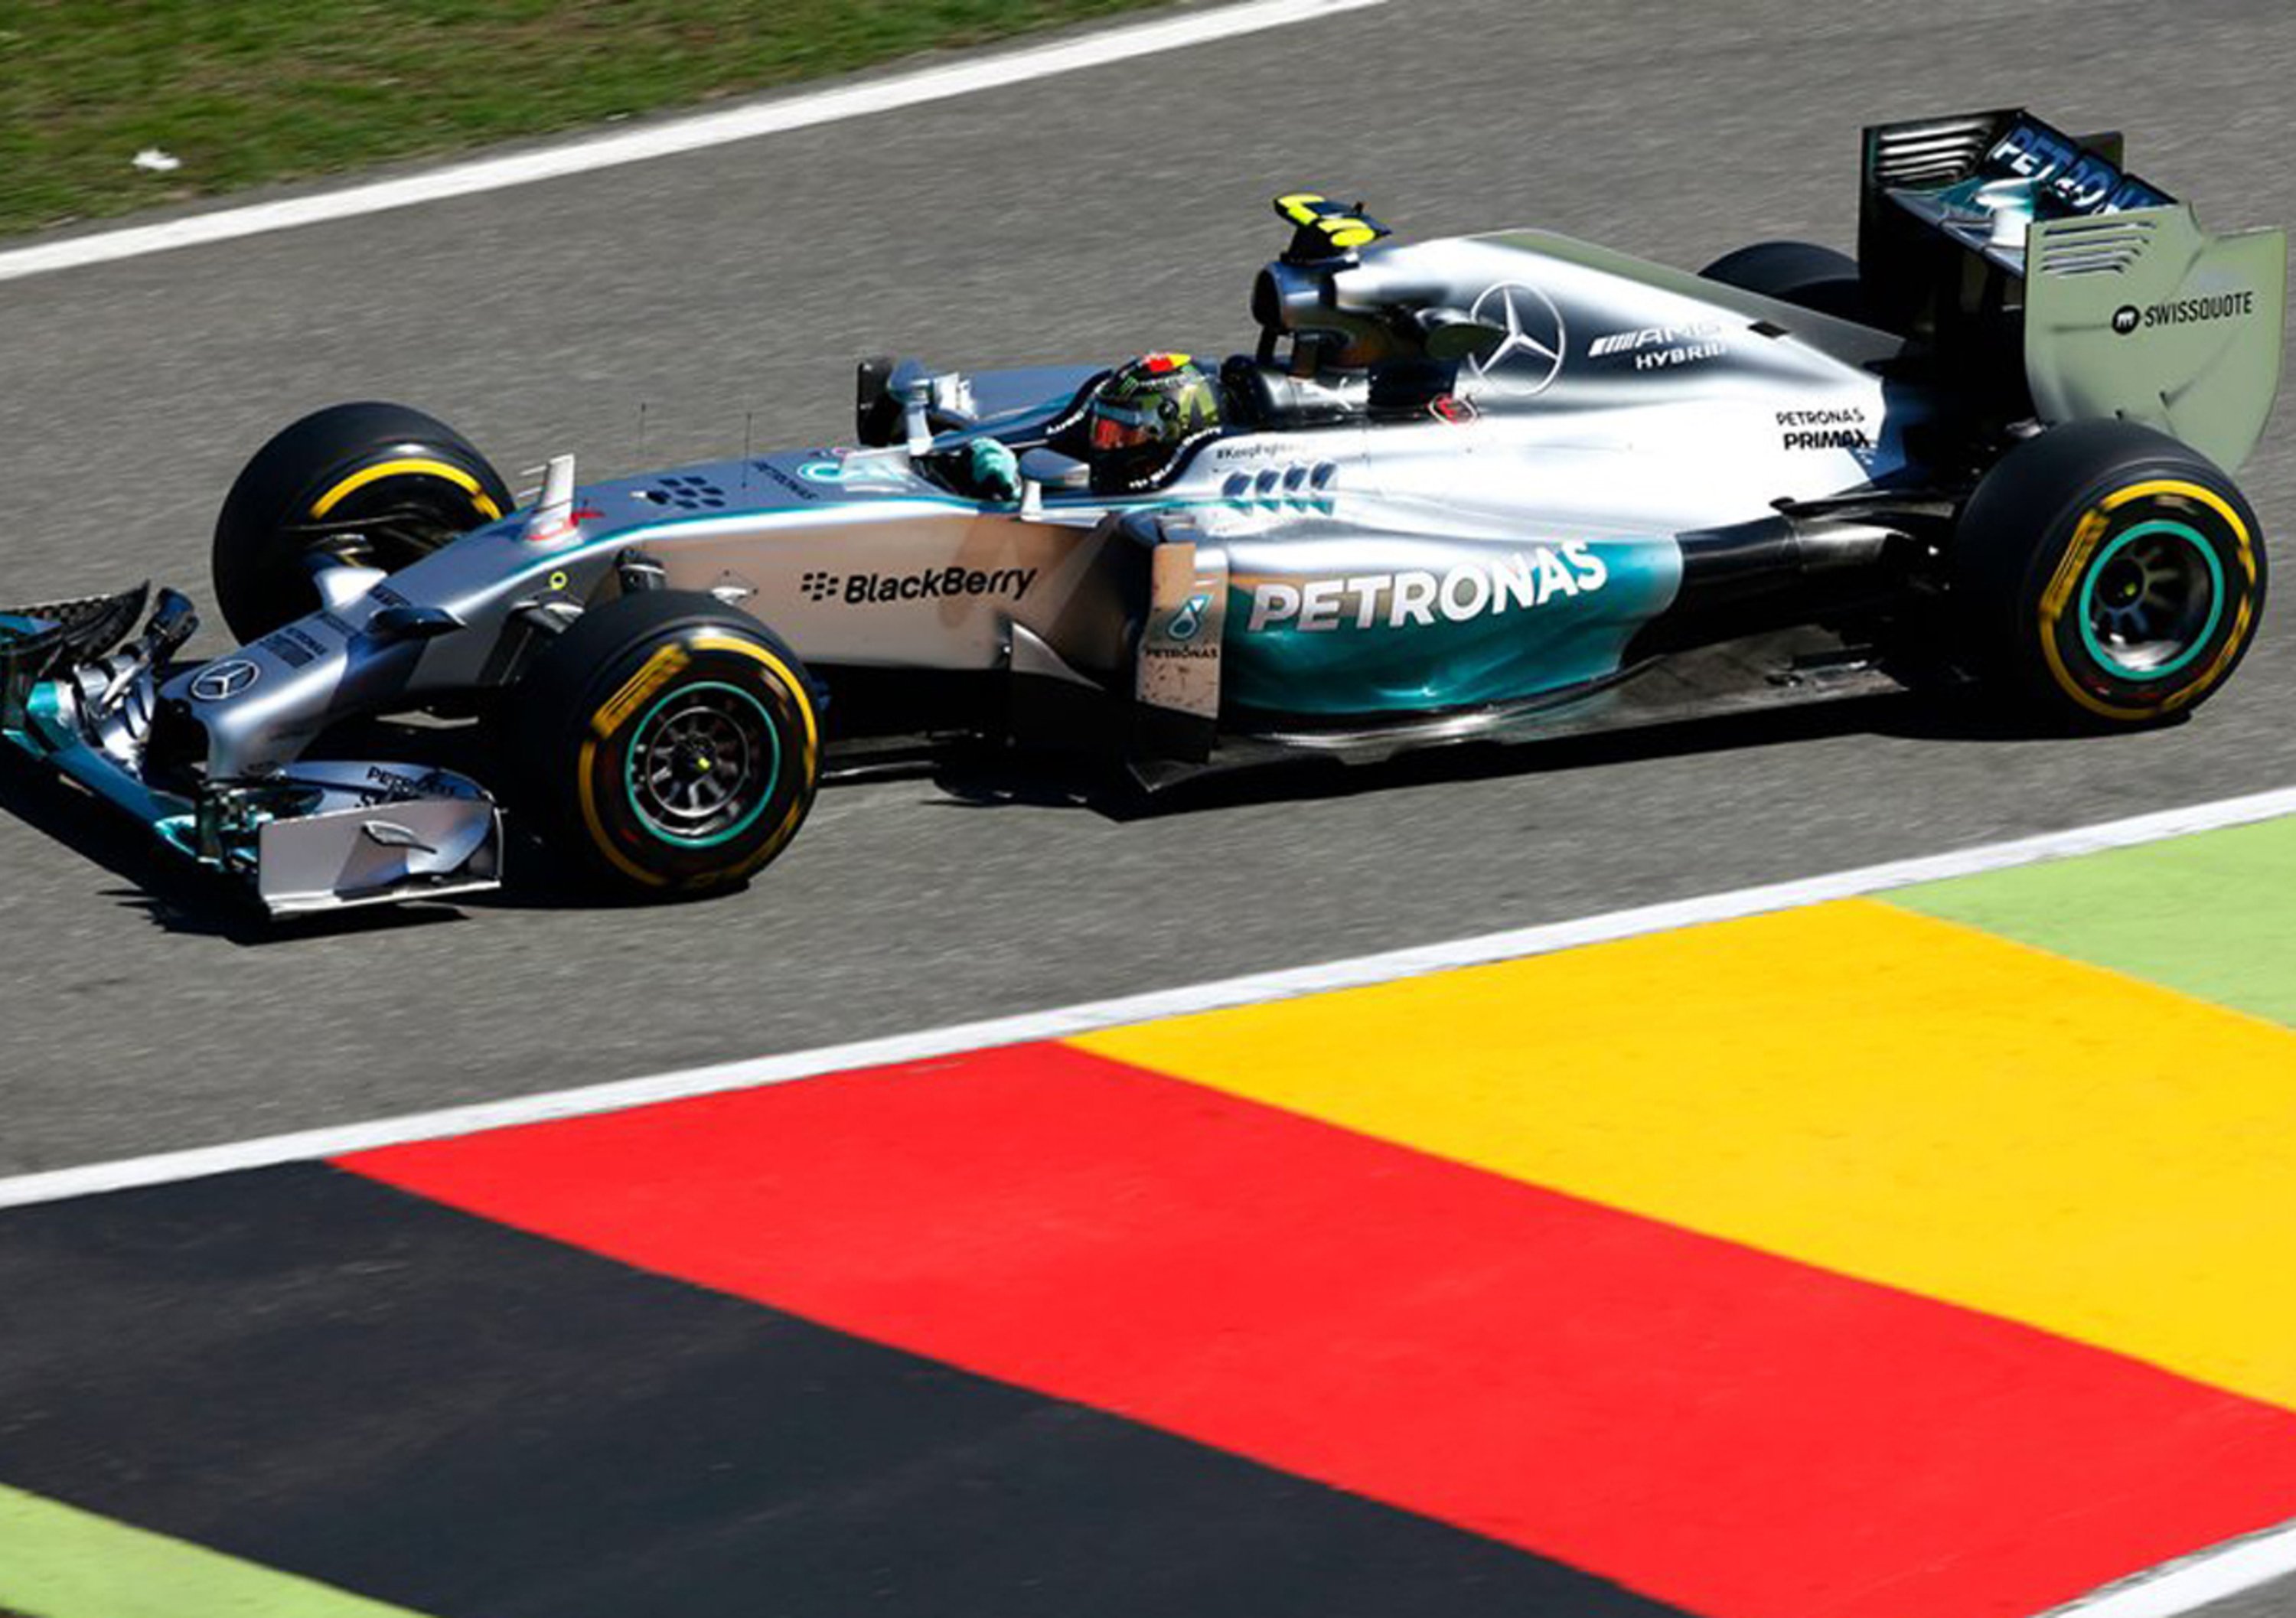 Formula 1 Germania 2014: Rosberg vince a Hockenheim